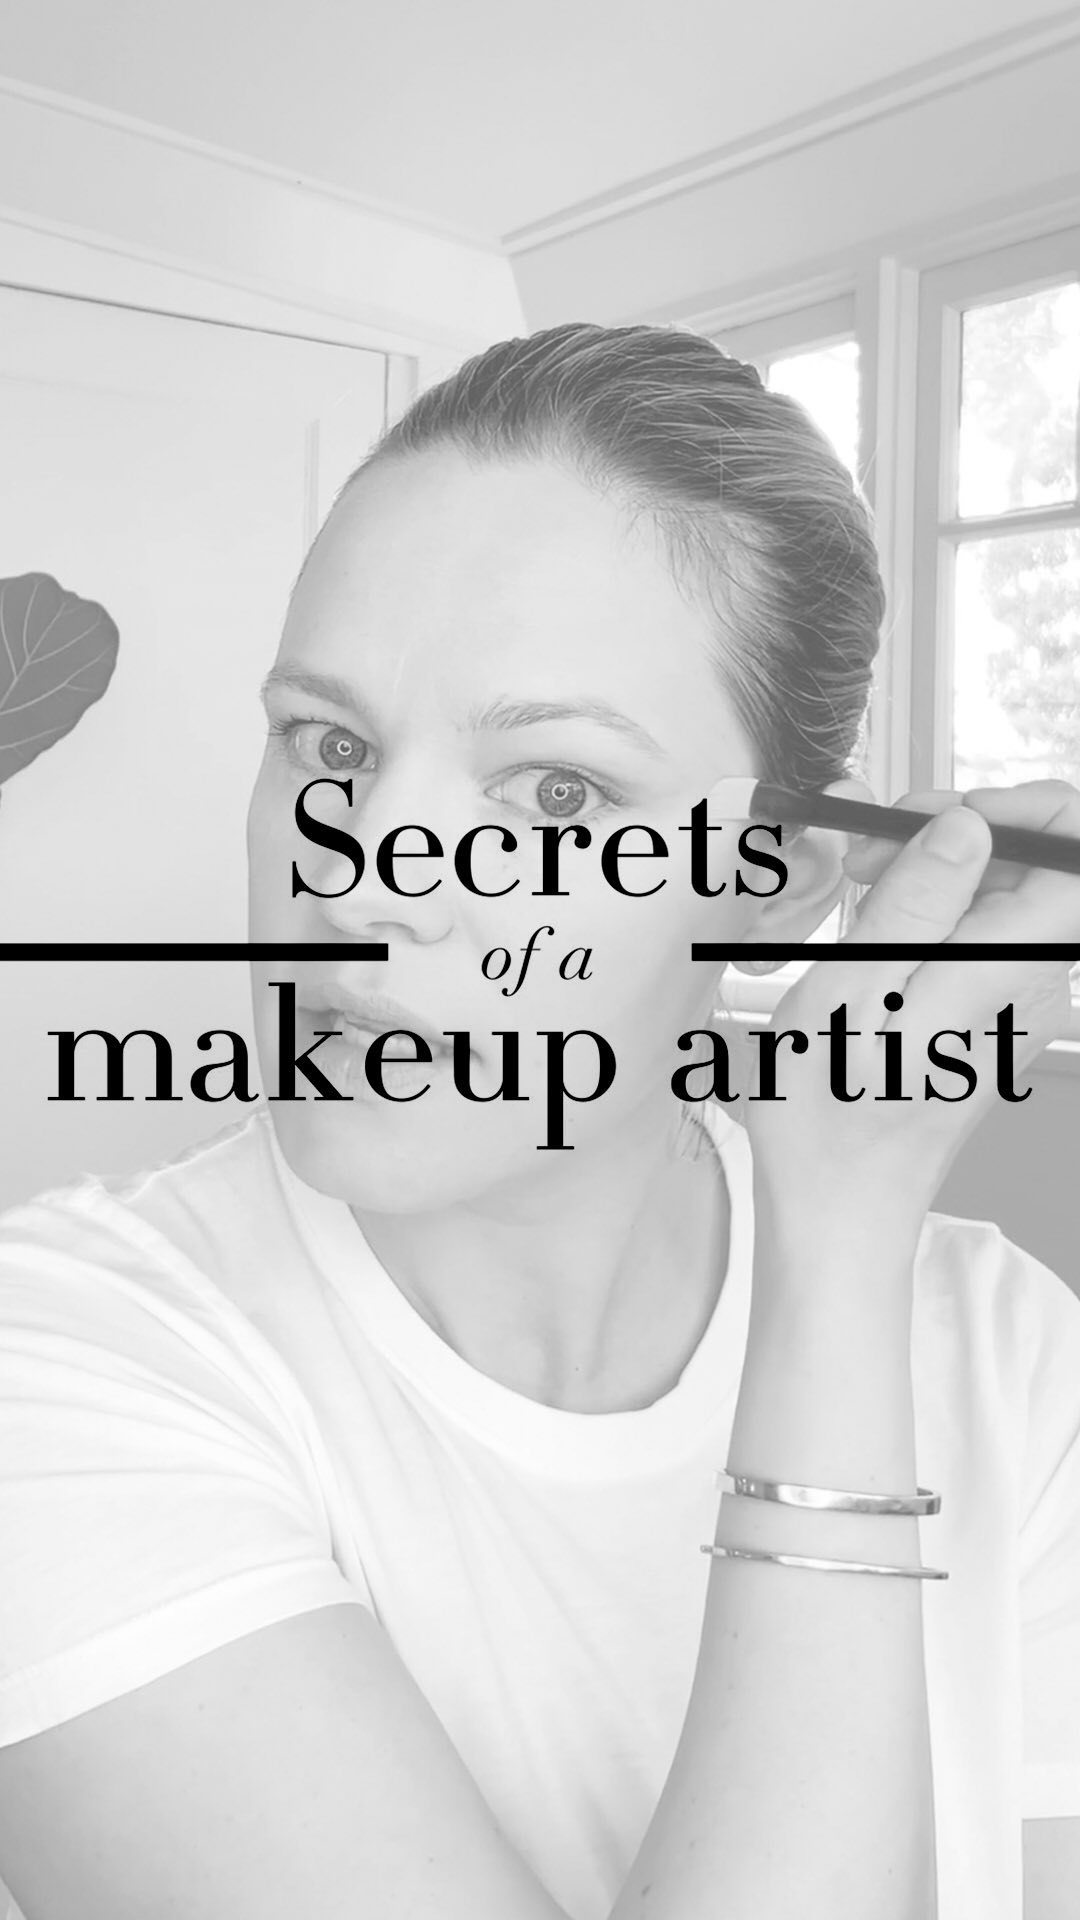 Armani beauty - Discover celebrity makeup artist @KayleenMcAdams's glowing skin #Armanibeauty look in the first episode of Secrets of a makeup artist. 

Recreate the look: 

LUMINOUS SILK PRIMER
LUMIN...